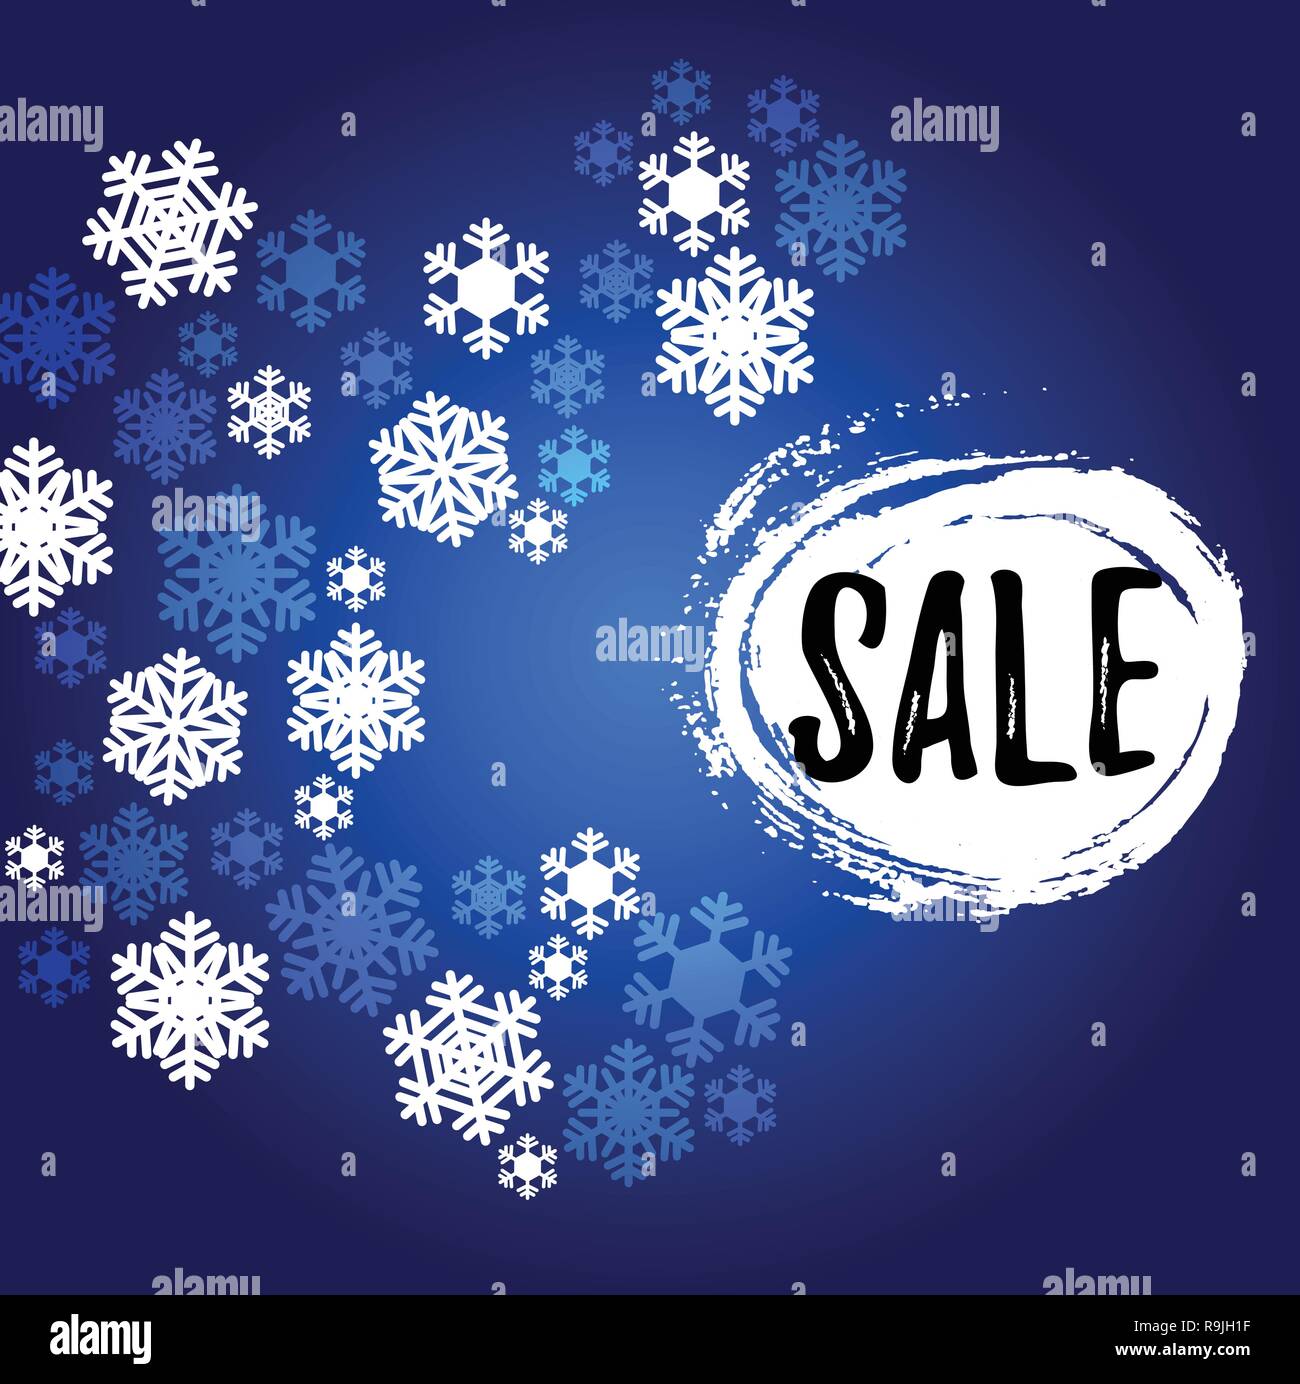 Natale blu navy e fiocchi di neve bianca Vendita discount offer banner Illustrazione Vettoriale